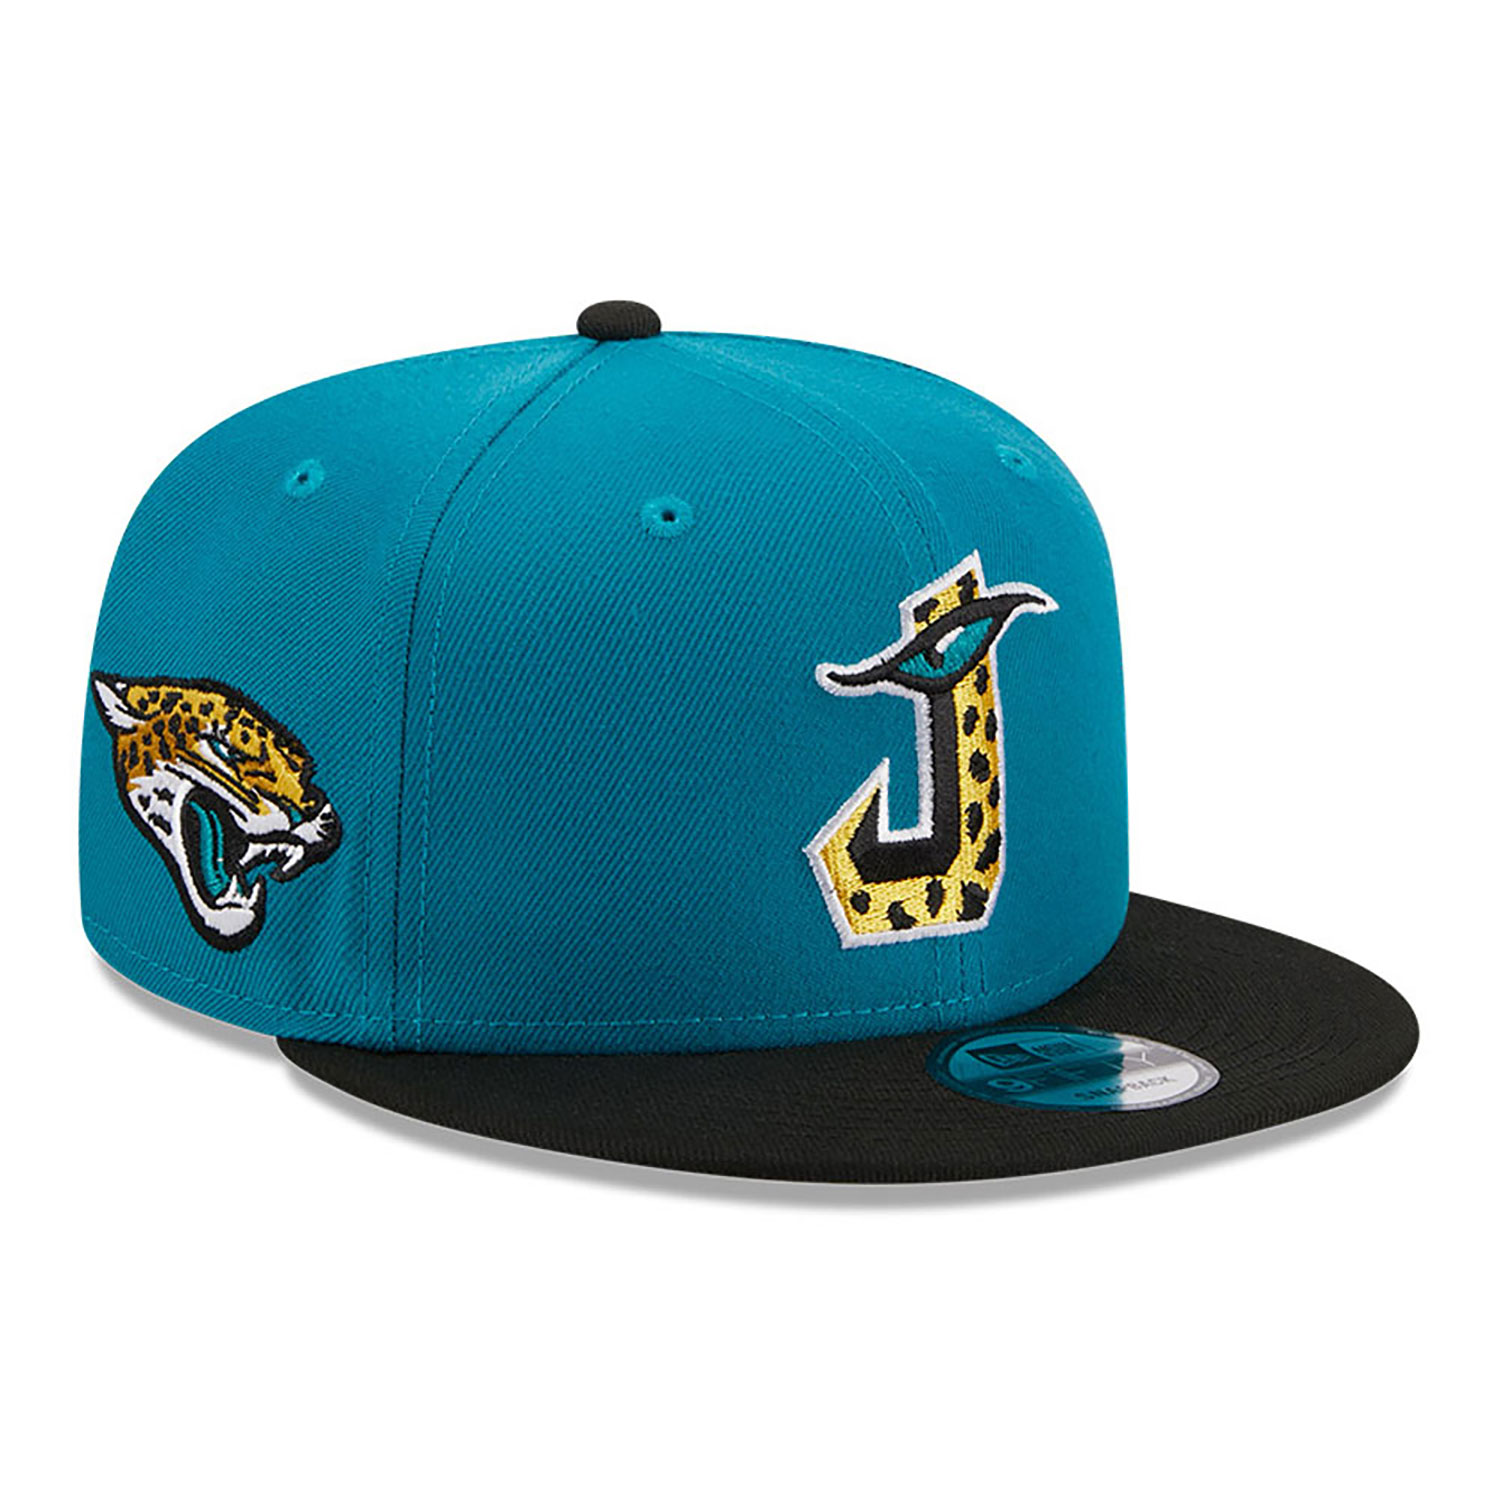 Jacksonville Jaguars NFL City Originals Turquoise 9FIFTY Snapback Cap